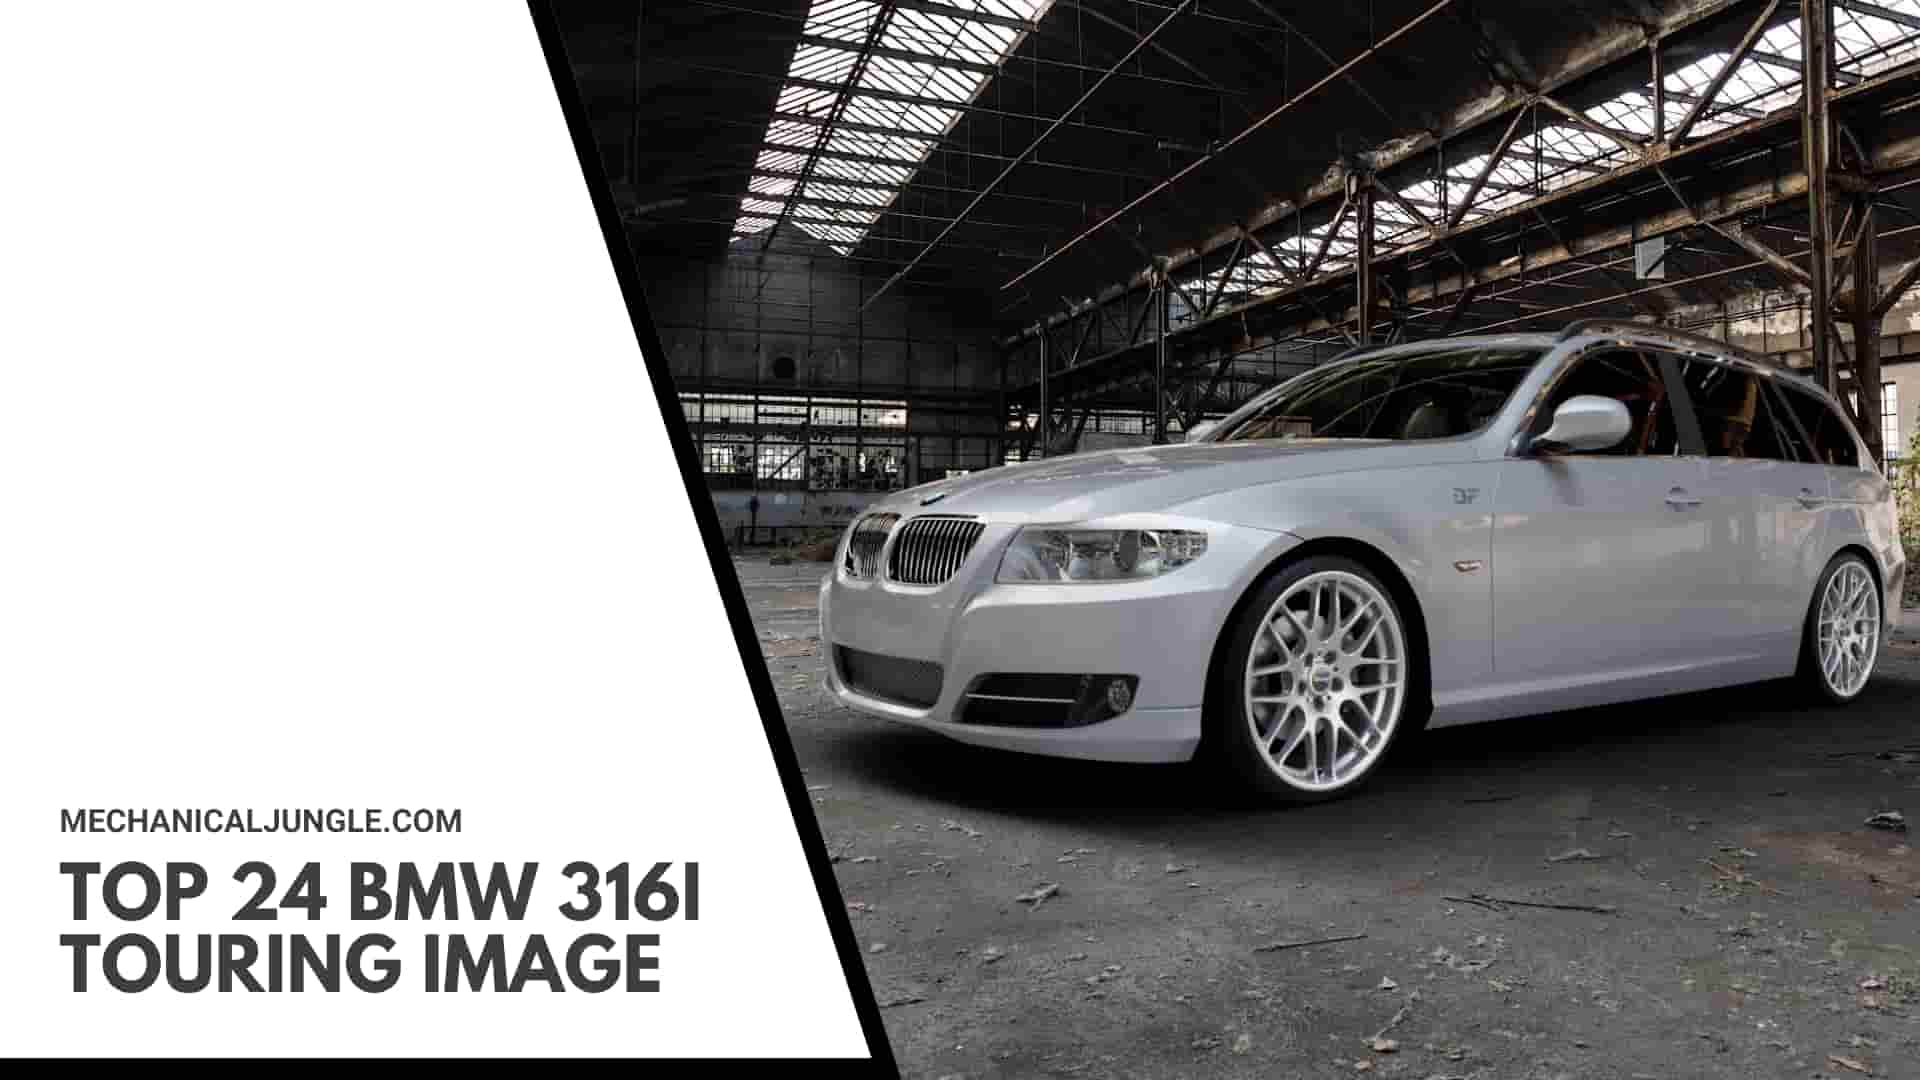 Top 24 BMW 316i Touring Image